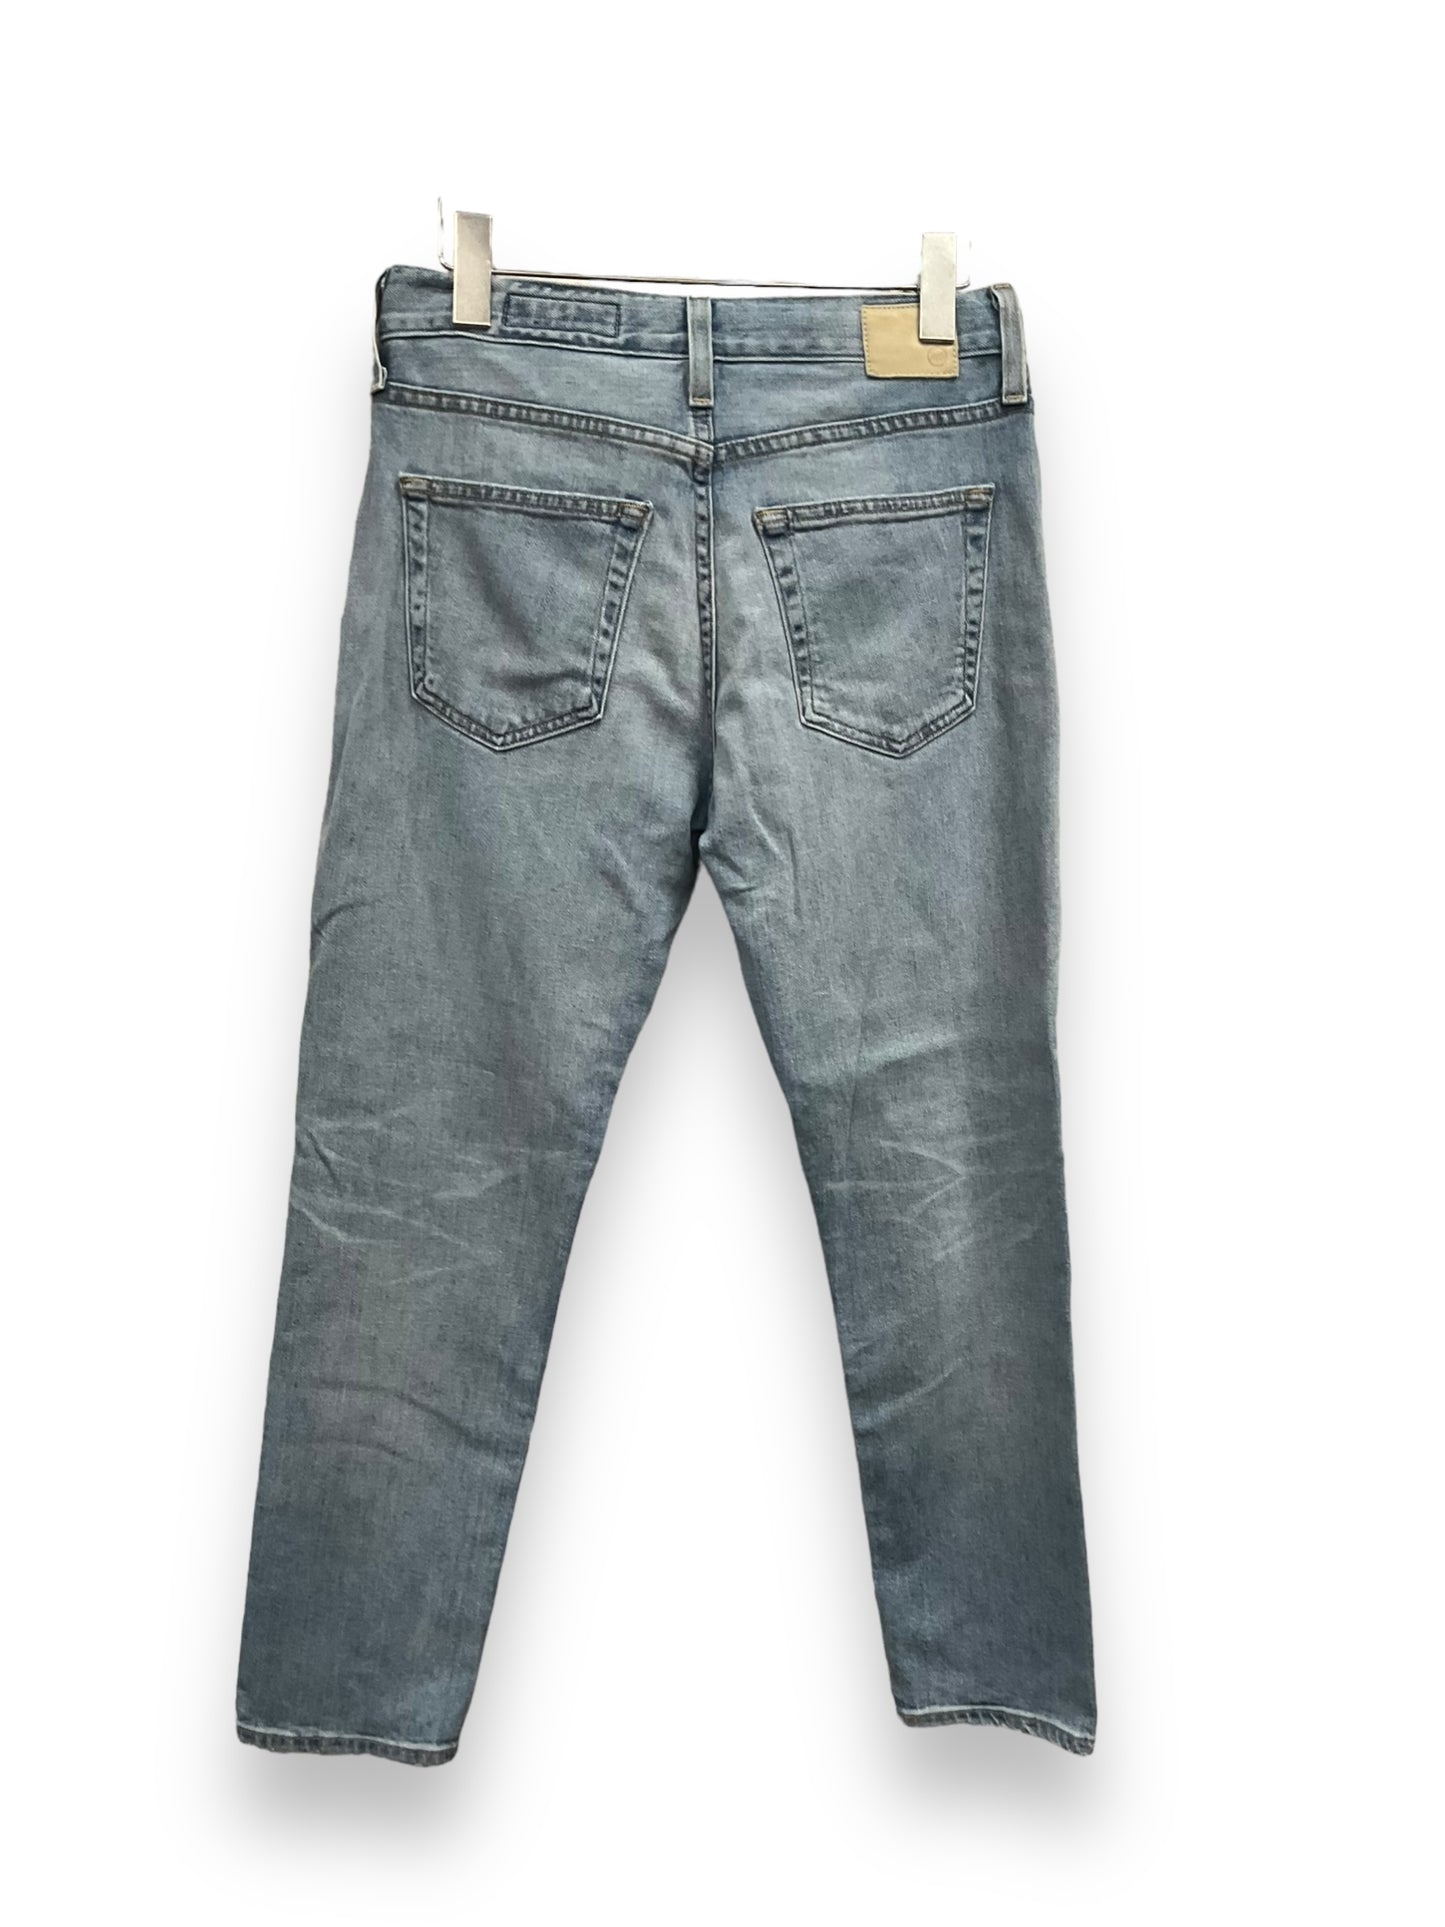 Jeans Boyfriend By Ag Jeans  Size: 4